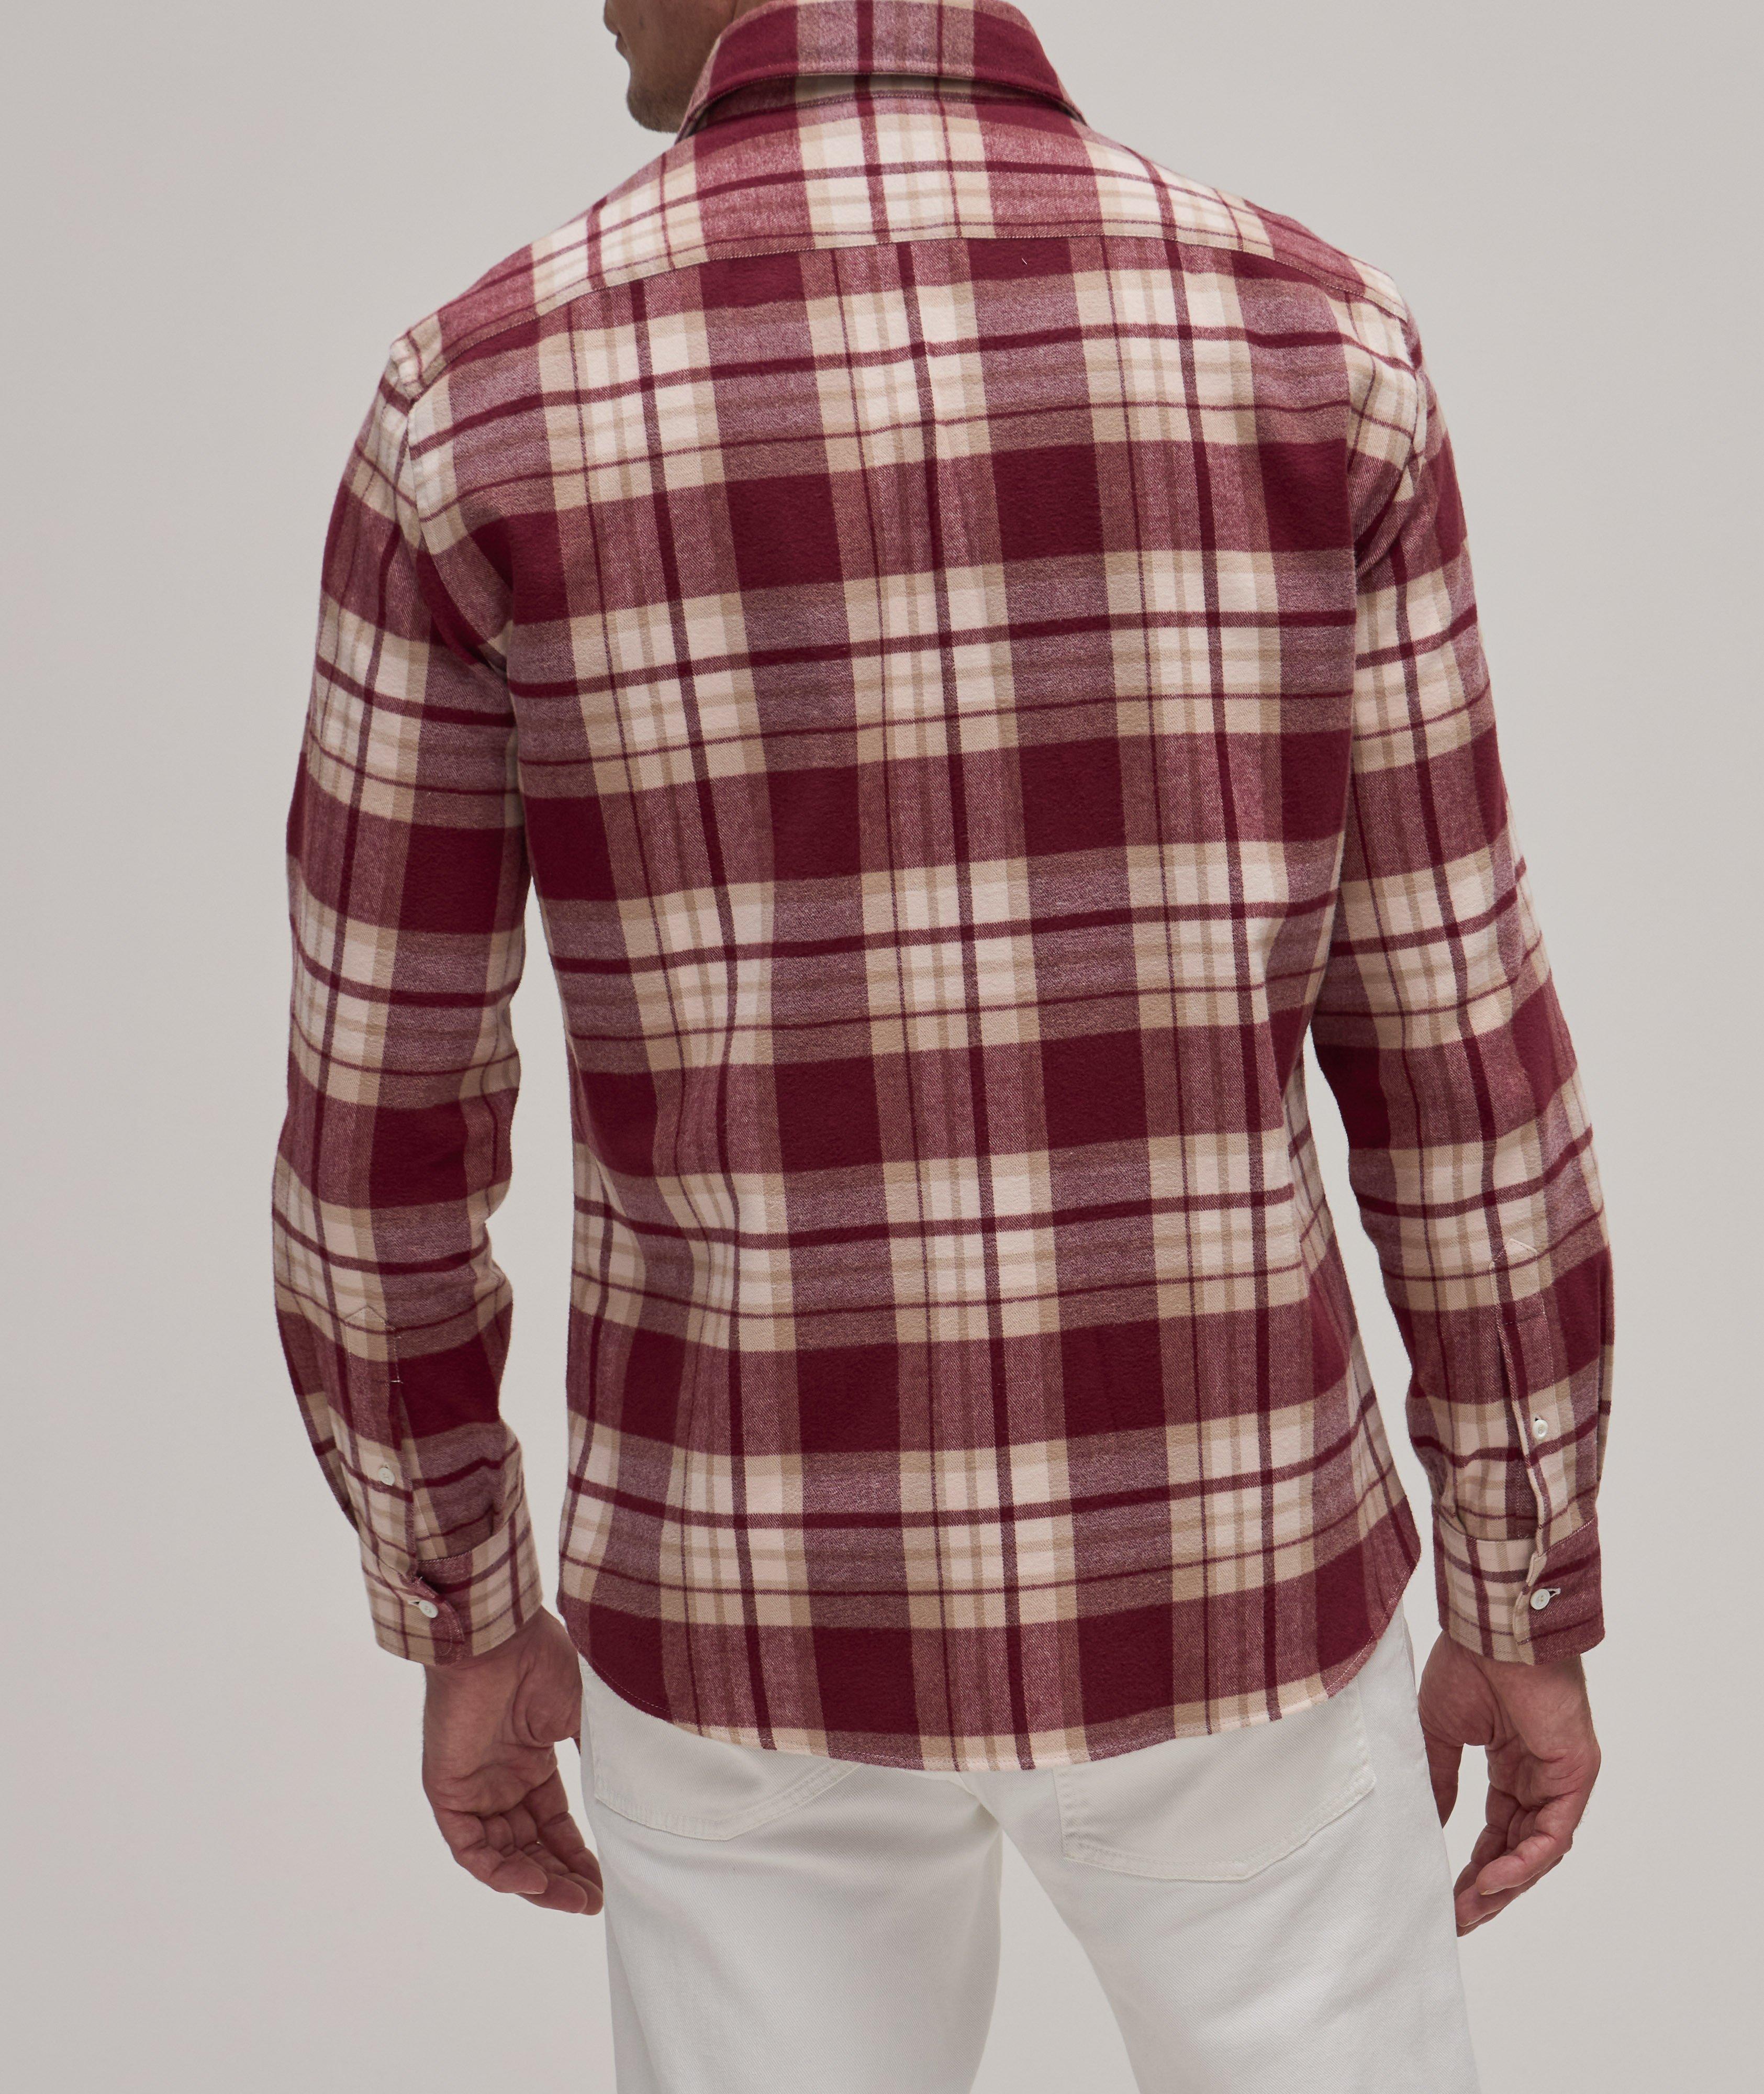 Easy-Fit Plaid Flannel Cotton Shirt image 2